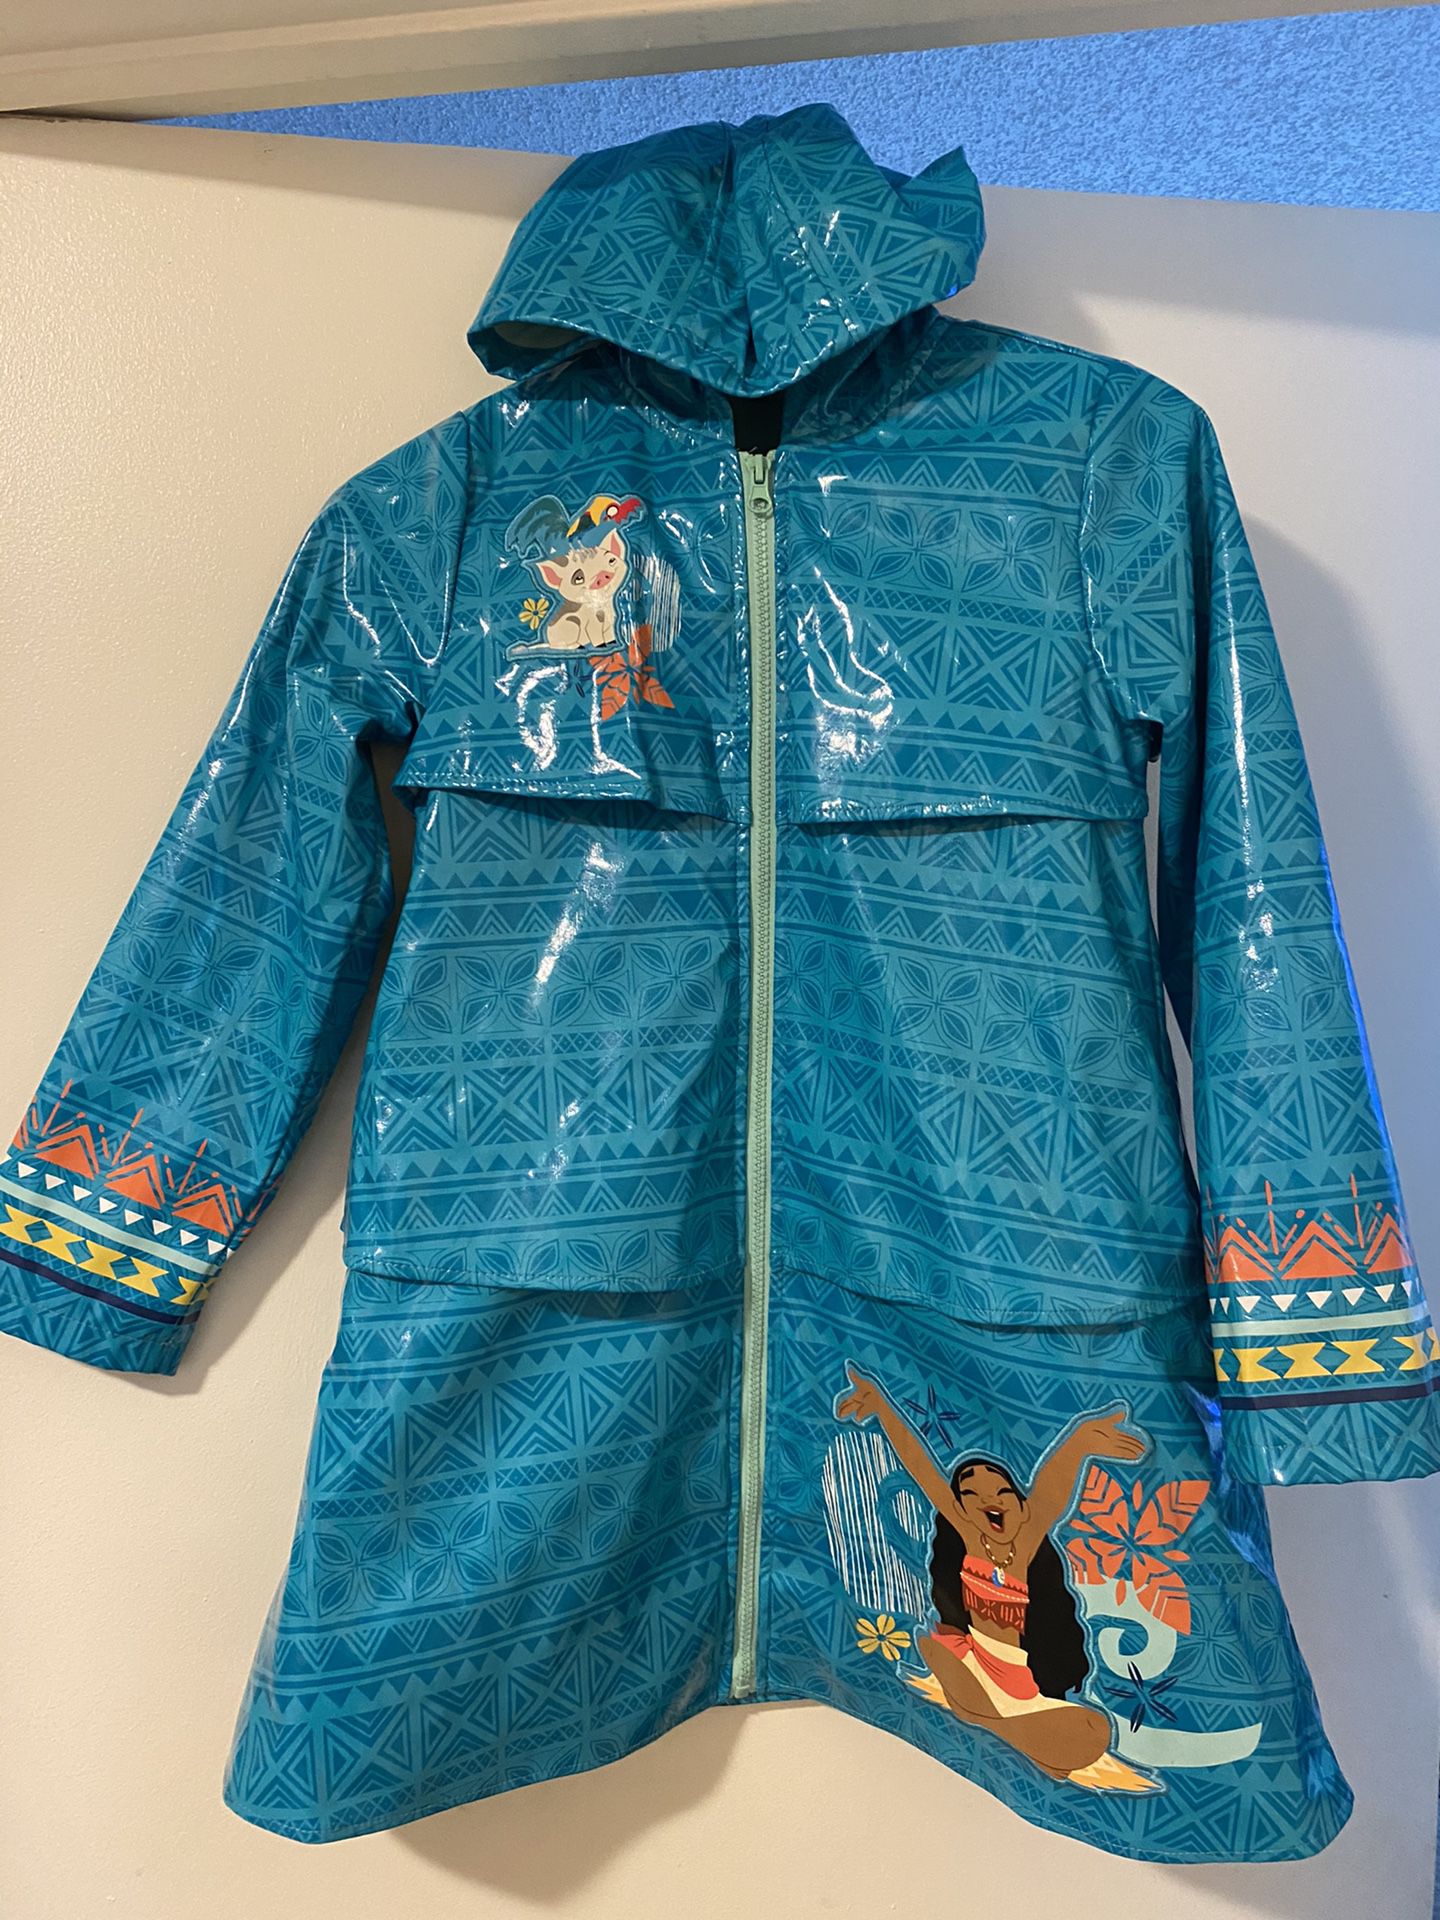 Rain Coat (size 7/8) Disney Moana & Mini Umbrella Included (Peppa Pig)